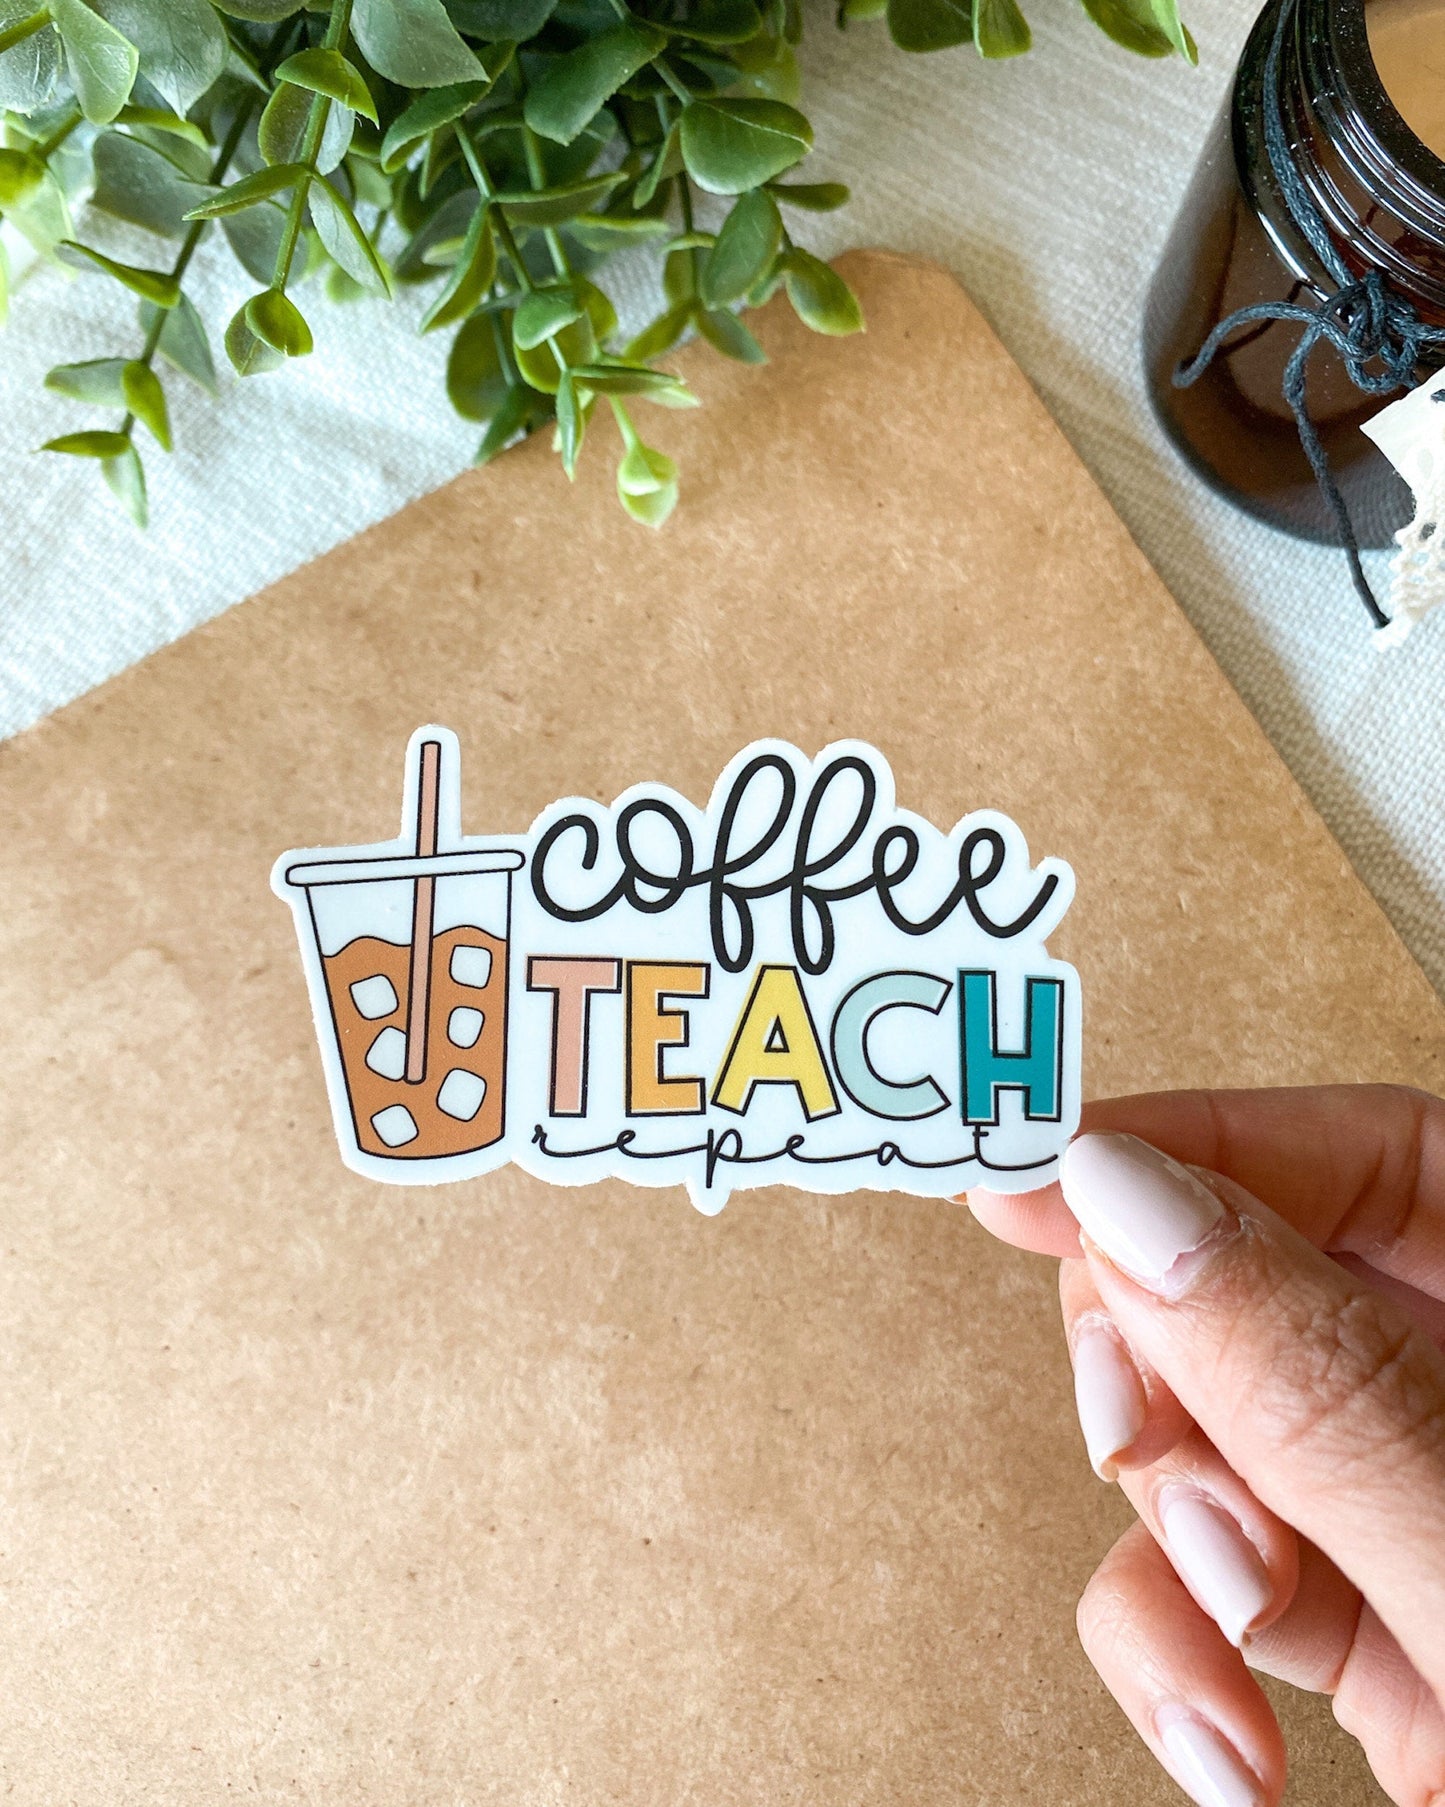 Coffee Teach Repeat Sticker